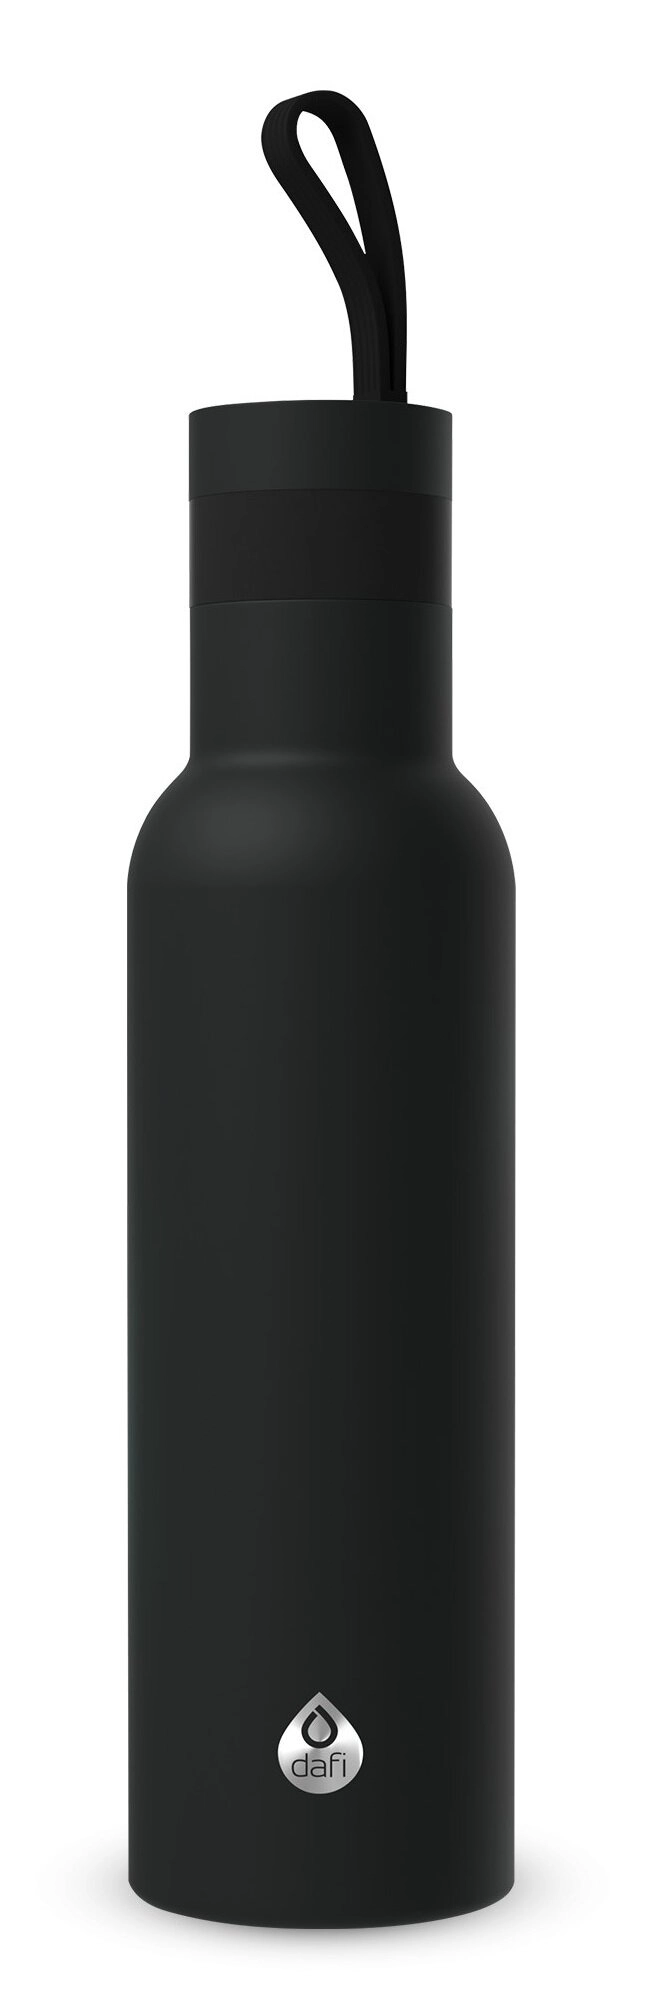 butelka-termiczna-dafi-easy-czarny-frontwebp